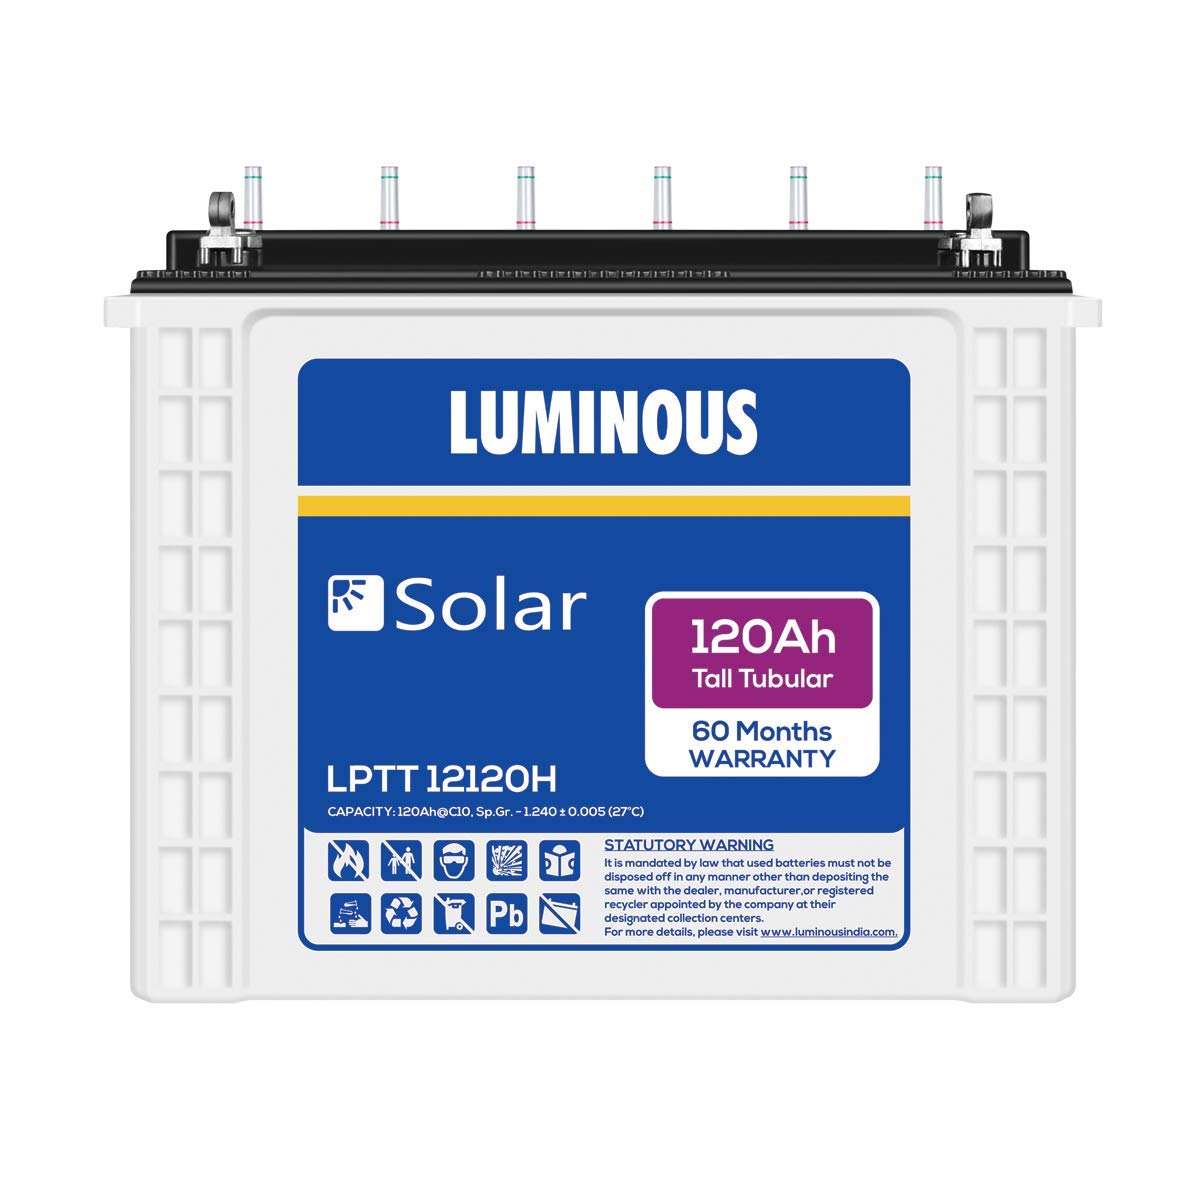 Luminous Solar Tall Tubular Battery 120AH - LPTT 12120H- Warranty: 72 Months - Solar World